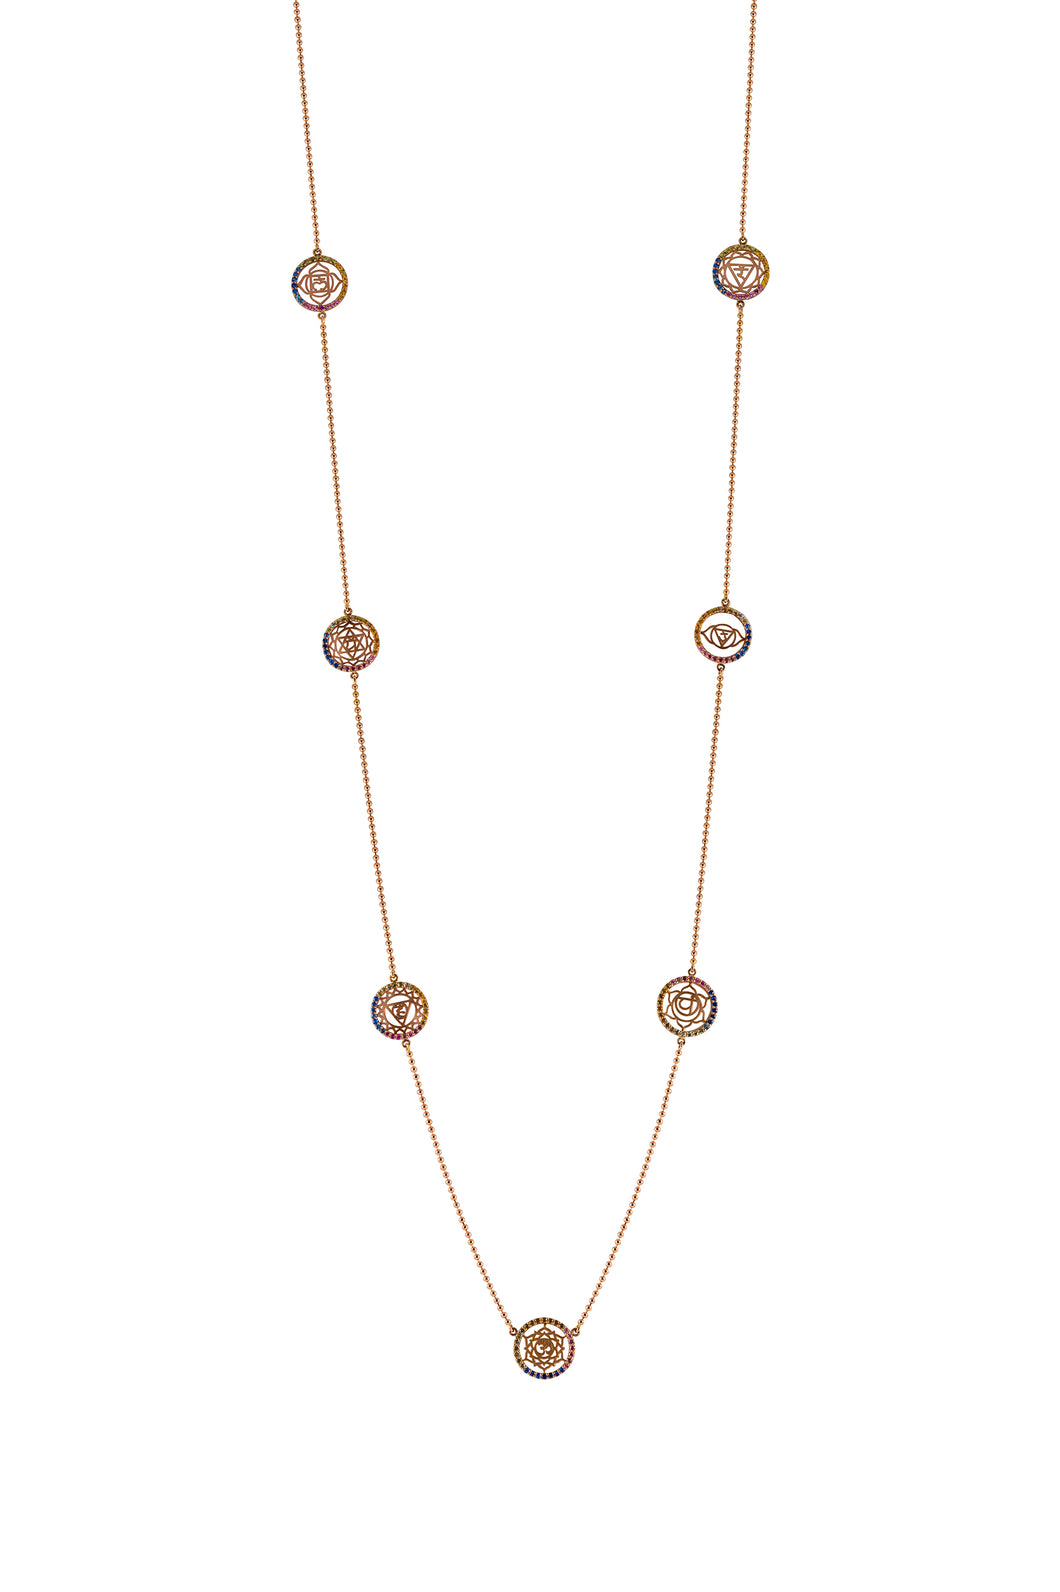 7 Chakras - Beads Necklace